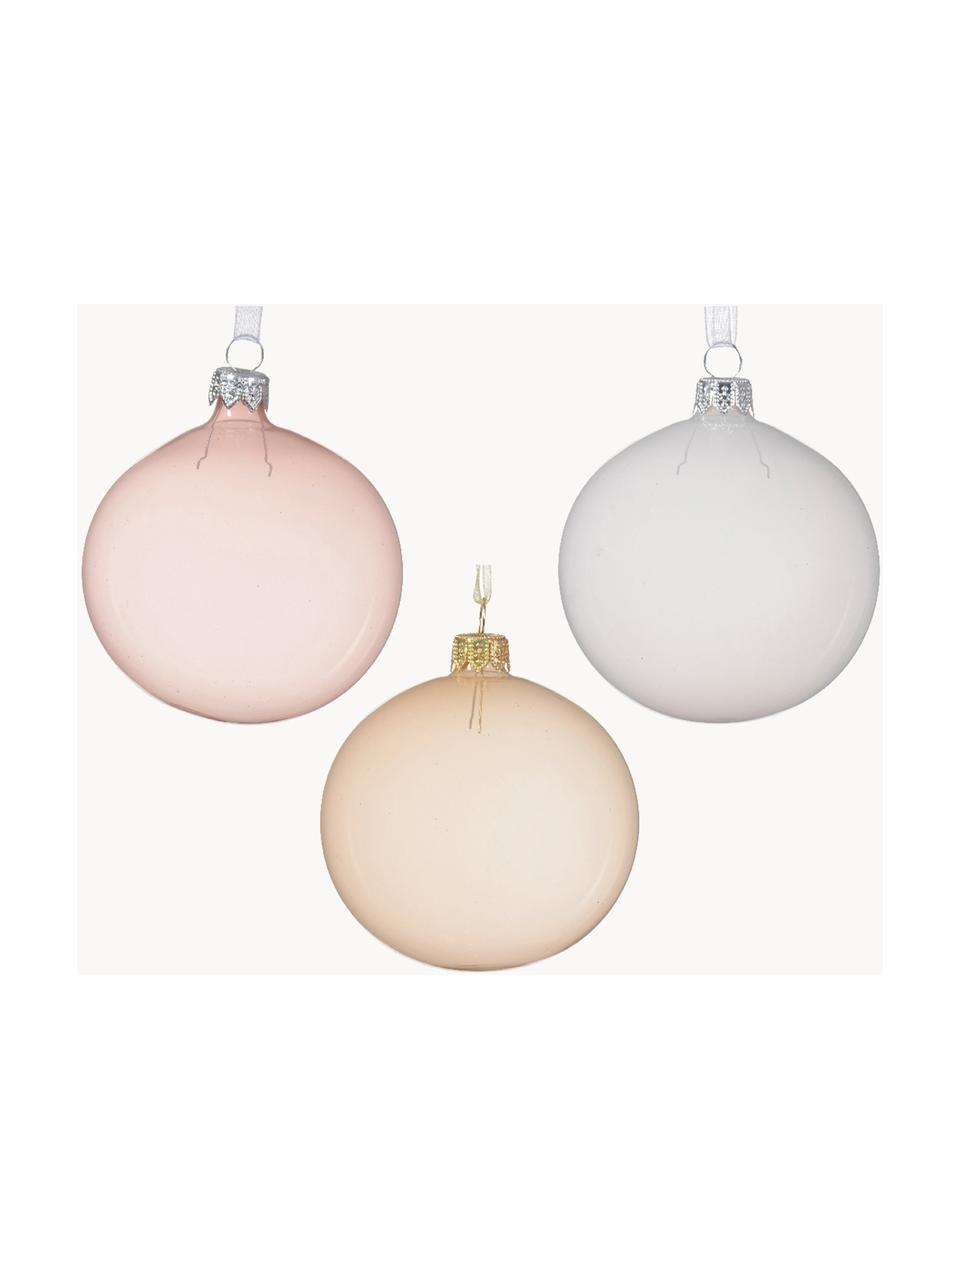 Kerstballen Shades, set van 6, Glas, Roze, wit, beige, transparant, Ø 8 cm